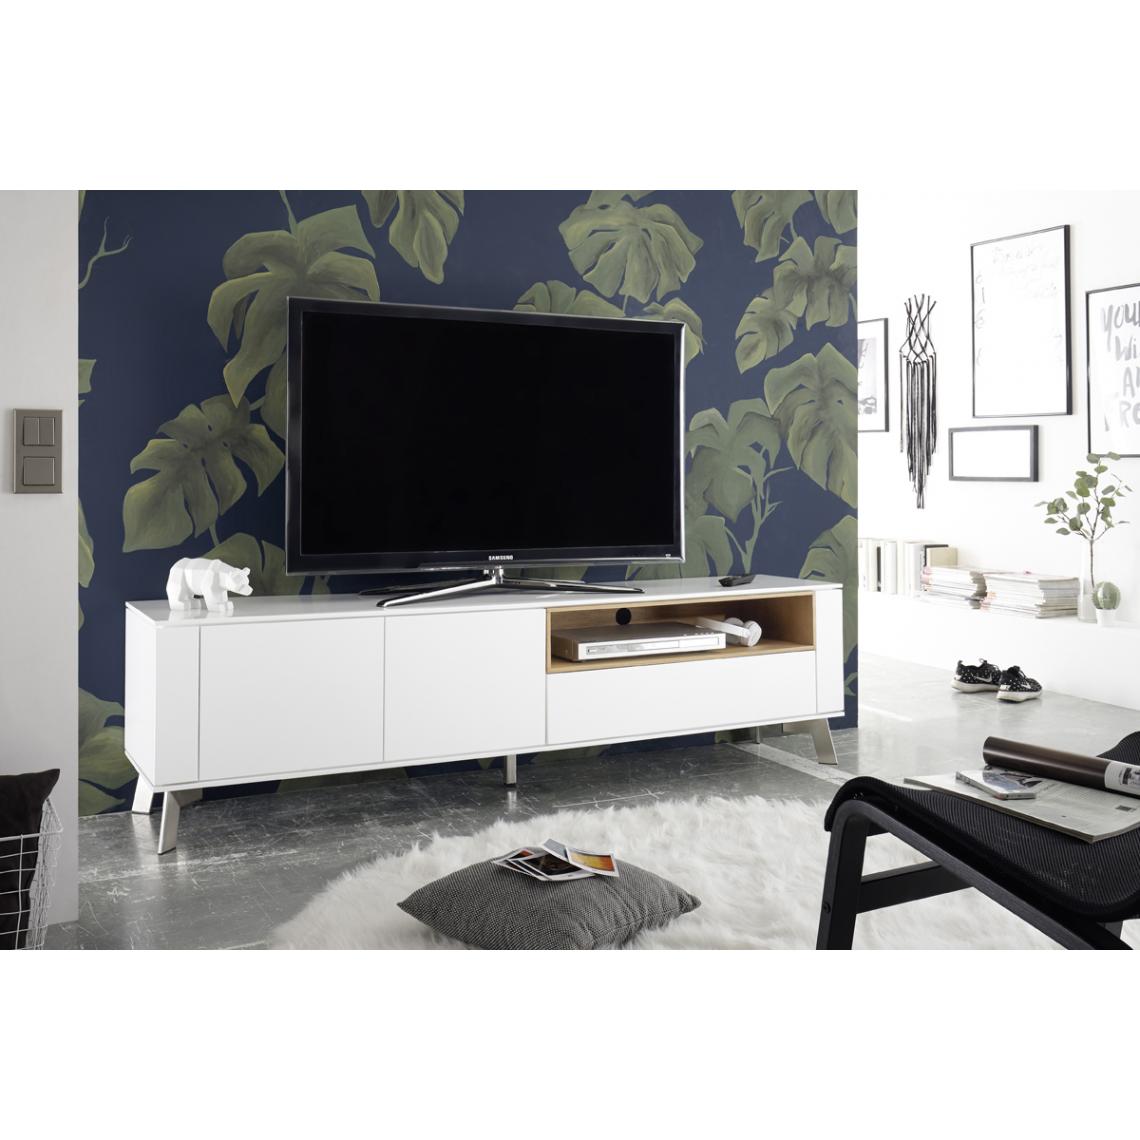 Pegane - Meuble TV blanc mat avec niche en chêne - L180 x H51 x P40 cm - Meubles TV, Hi-Fi